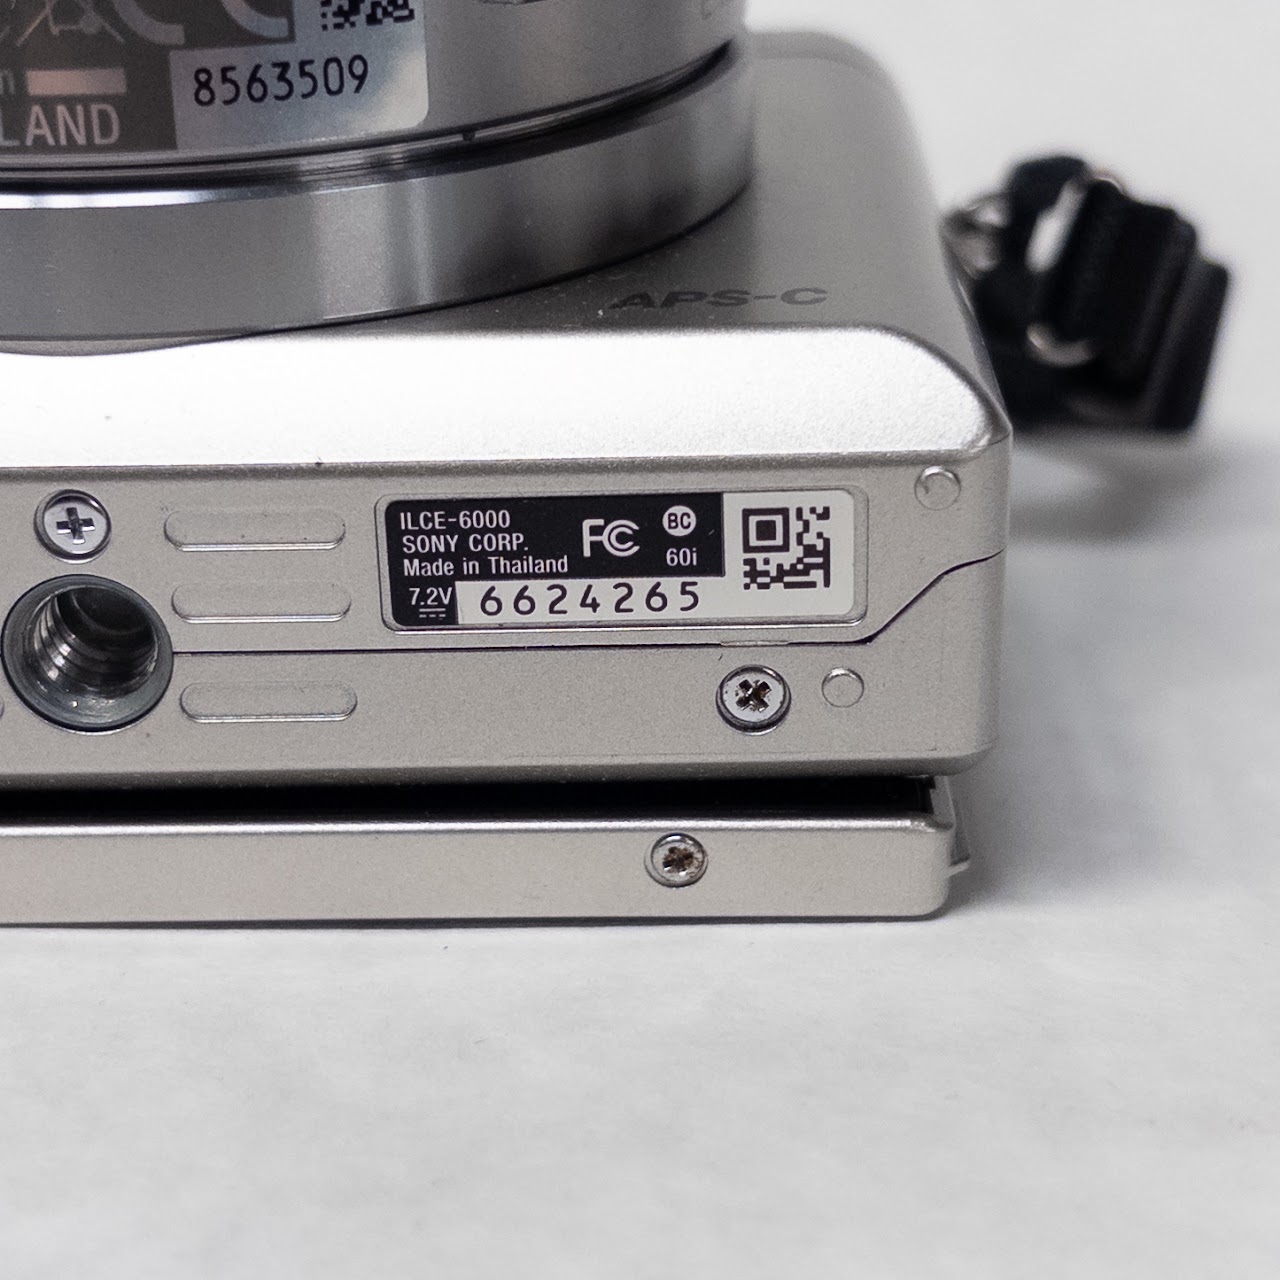 Sony Alpha 6000 APS-C Interchangeable Lens Camera